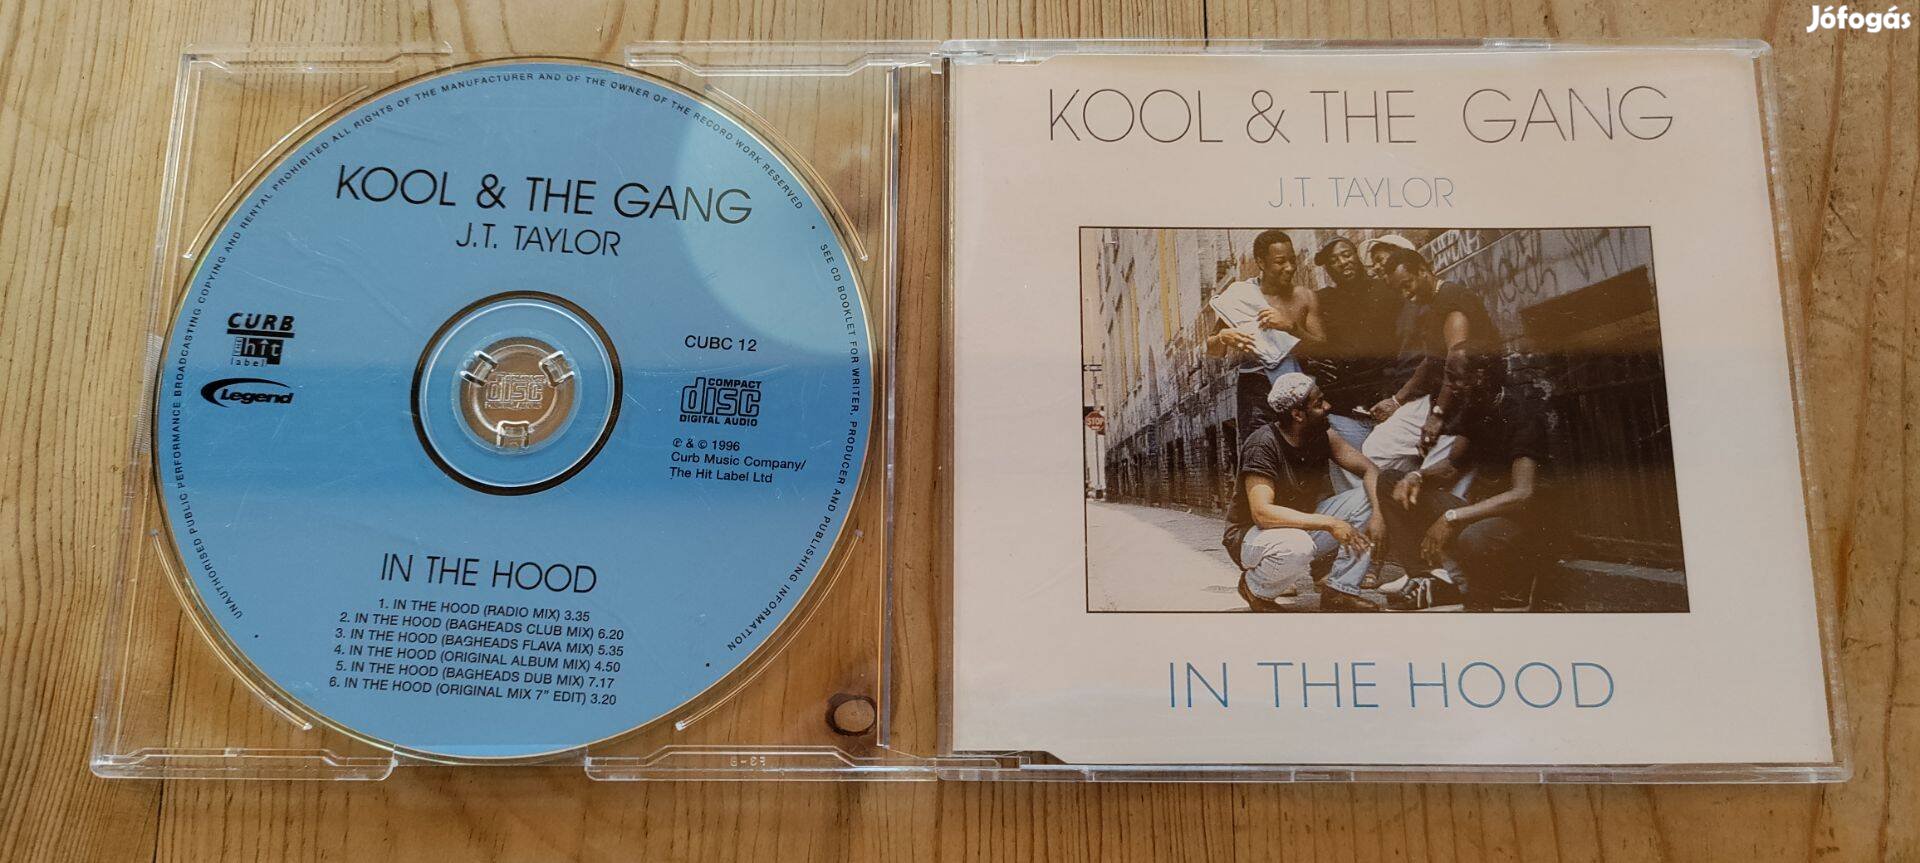 Kool & the Gang - In the hood maxi CD